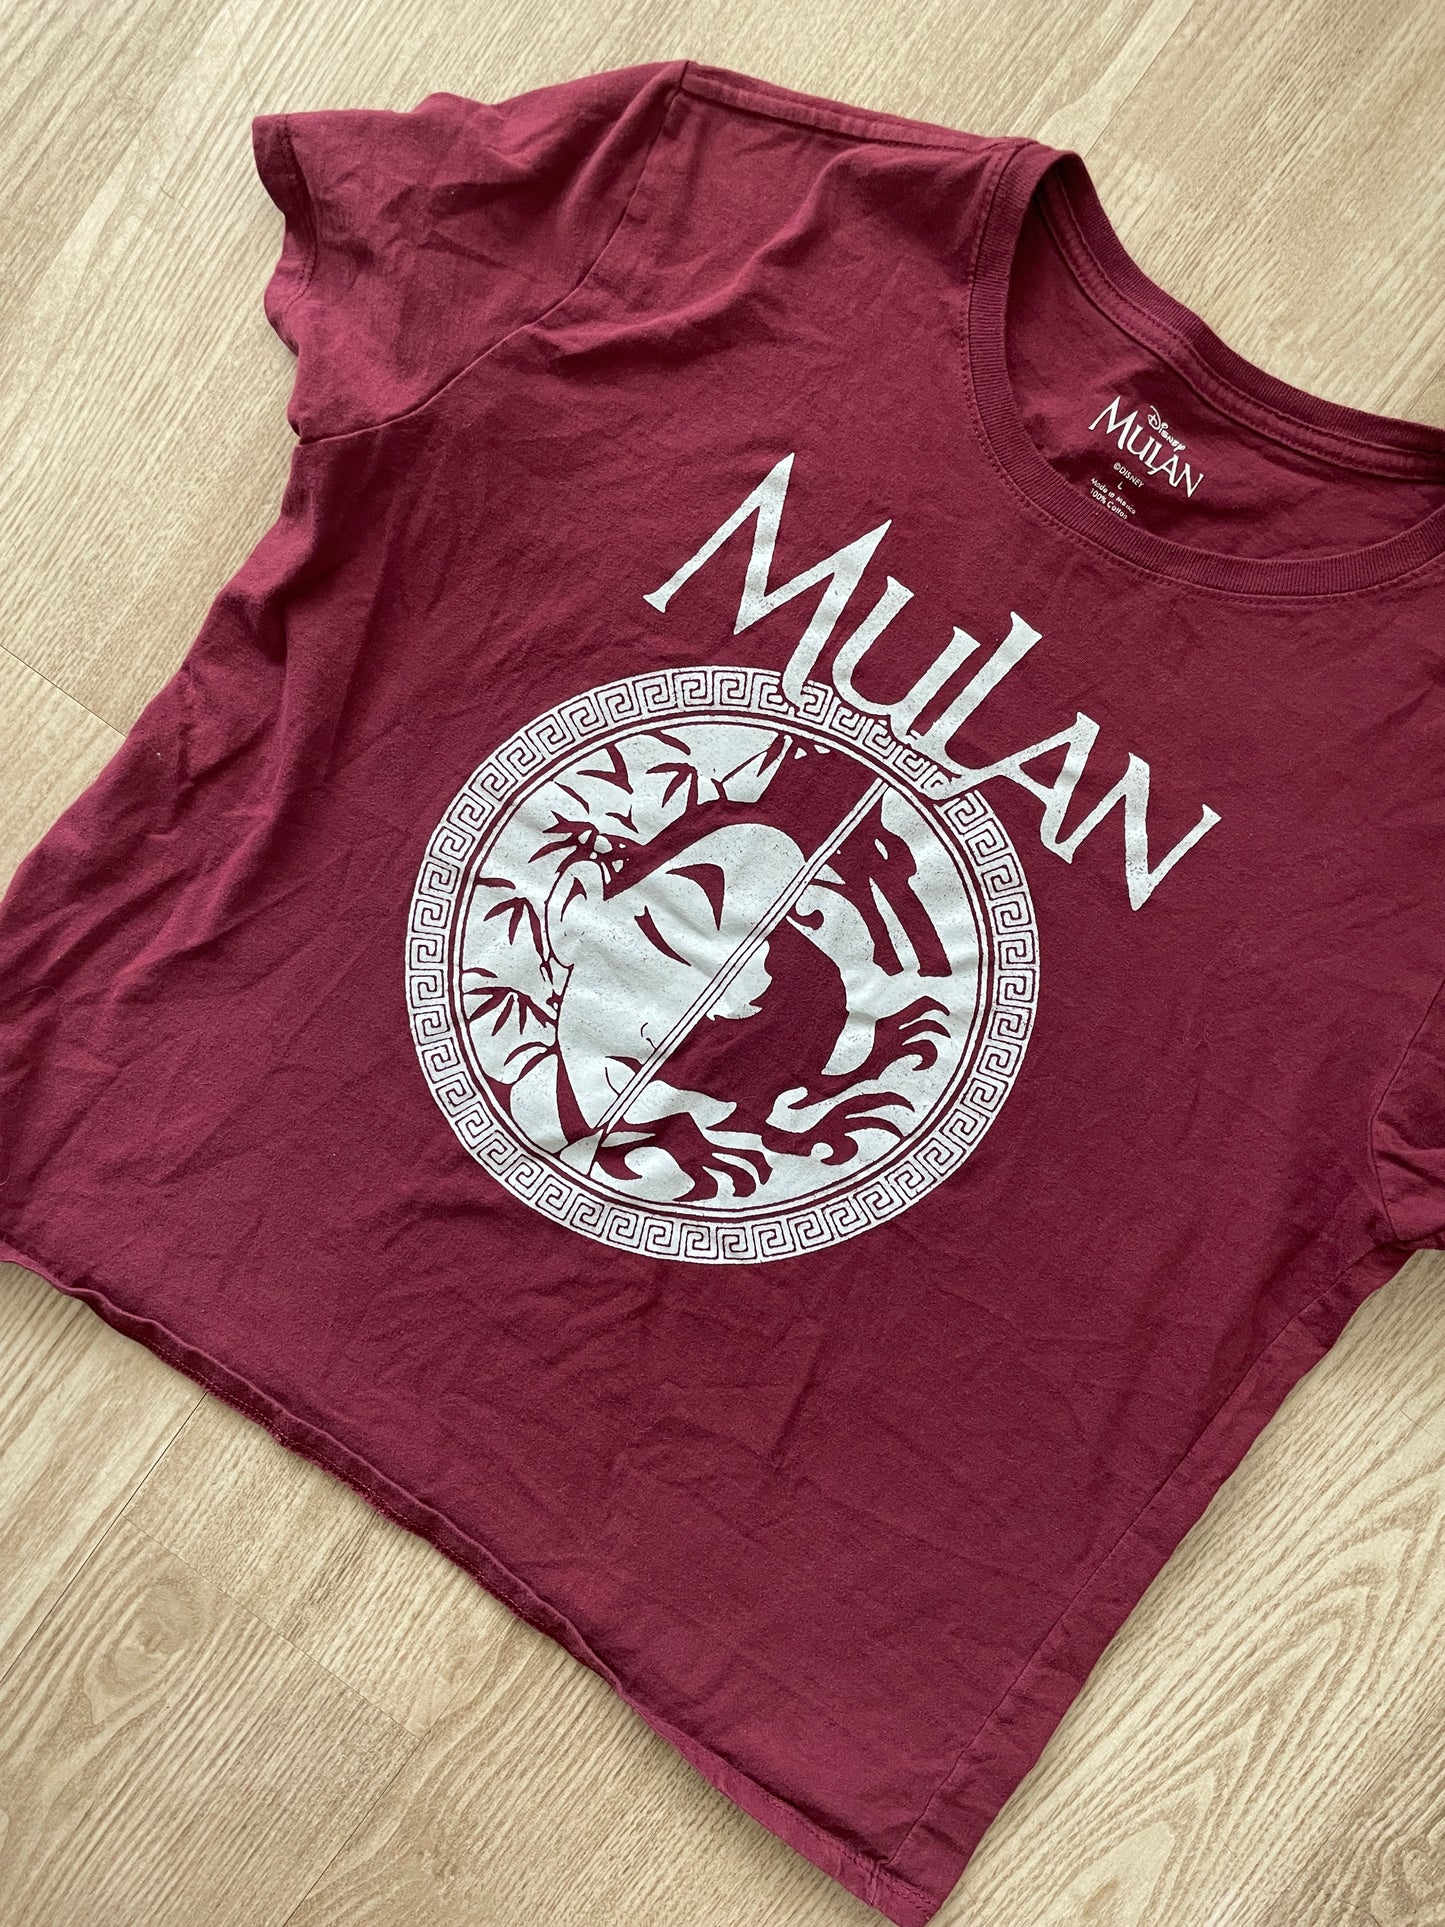 Large Women's Maroon Mulan Short Sleeve Crop Top T-Shirt | READY TO TIE DYE